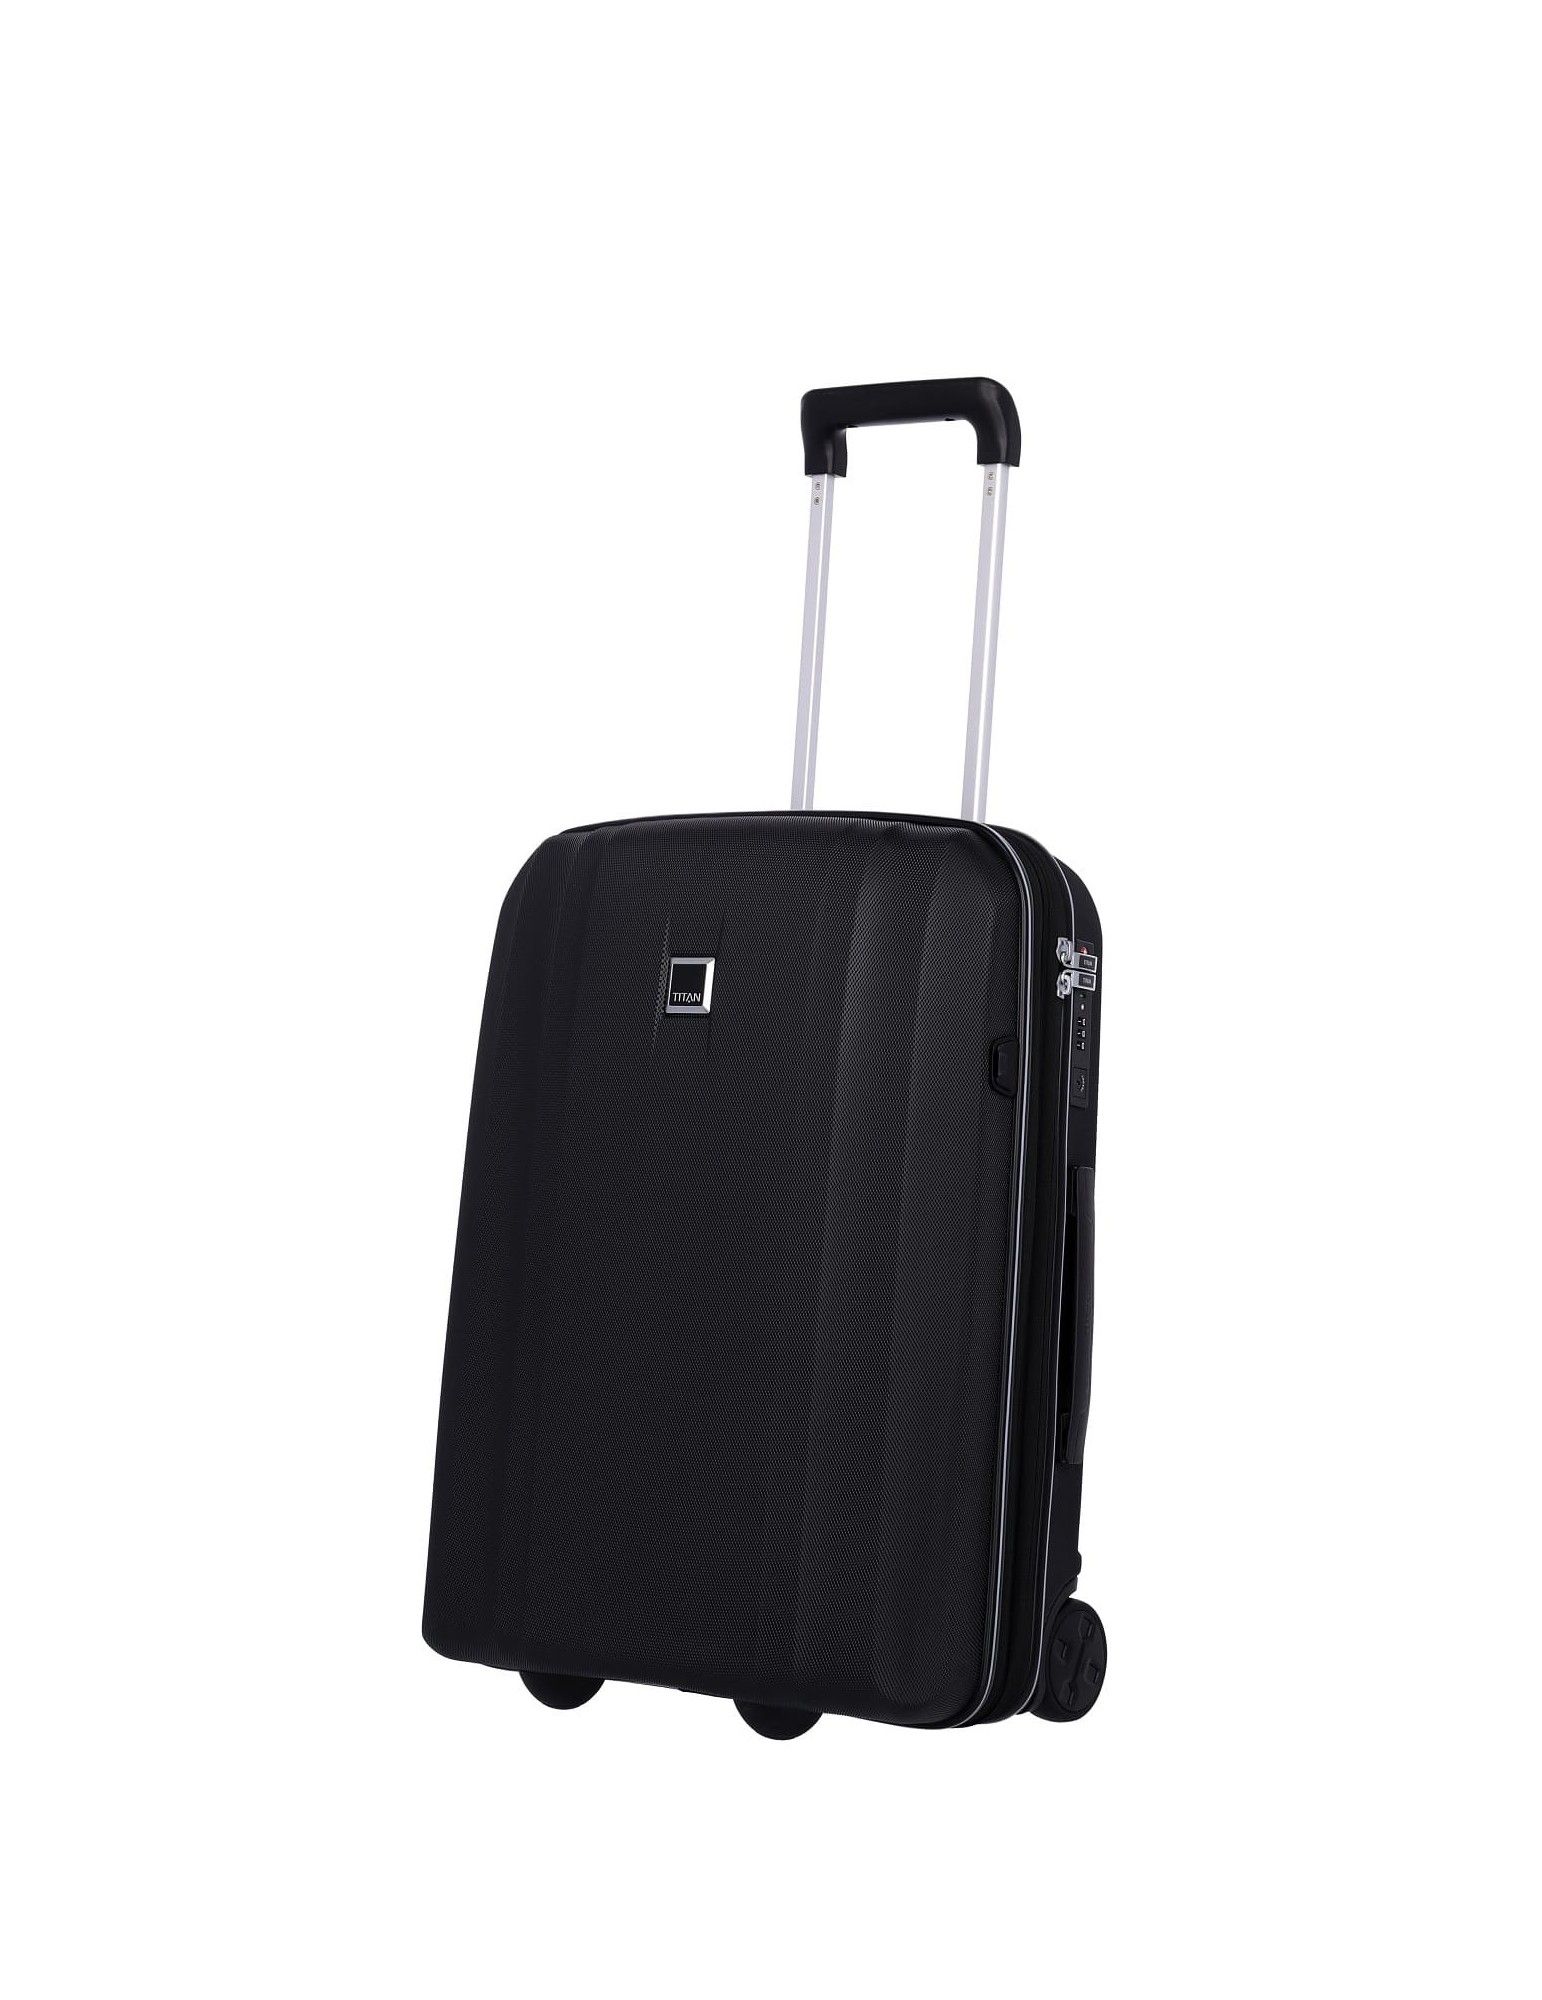 TITAN Xenon 2 wheel hand luggage expandable USB port